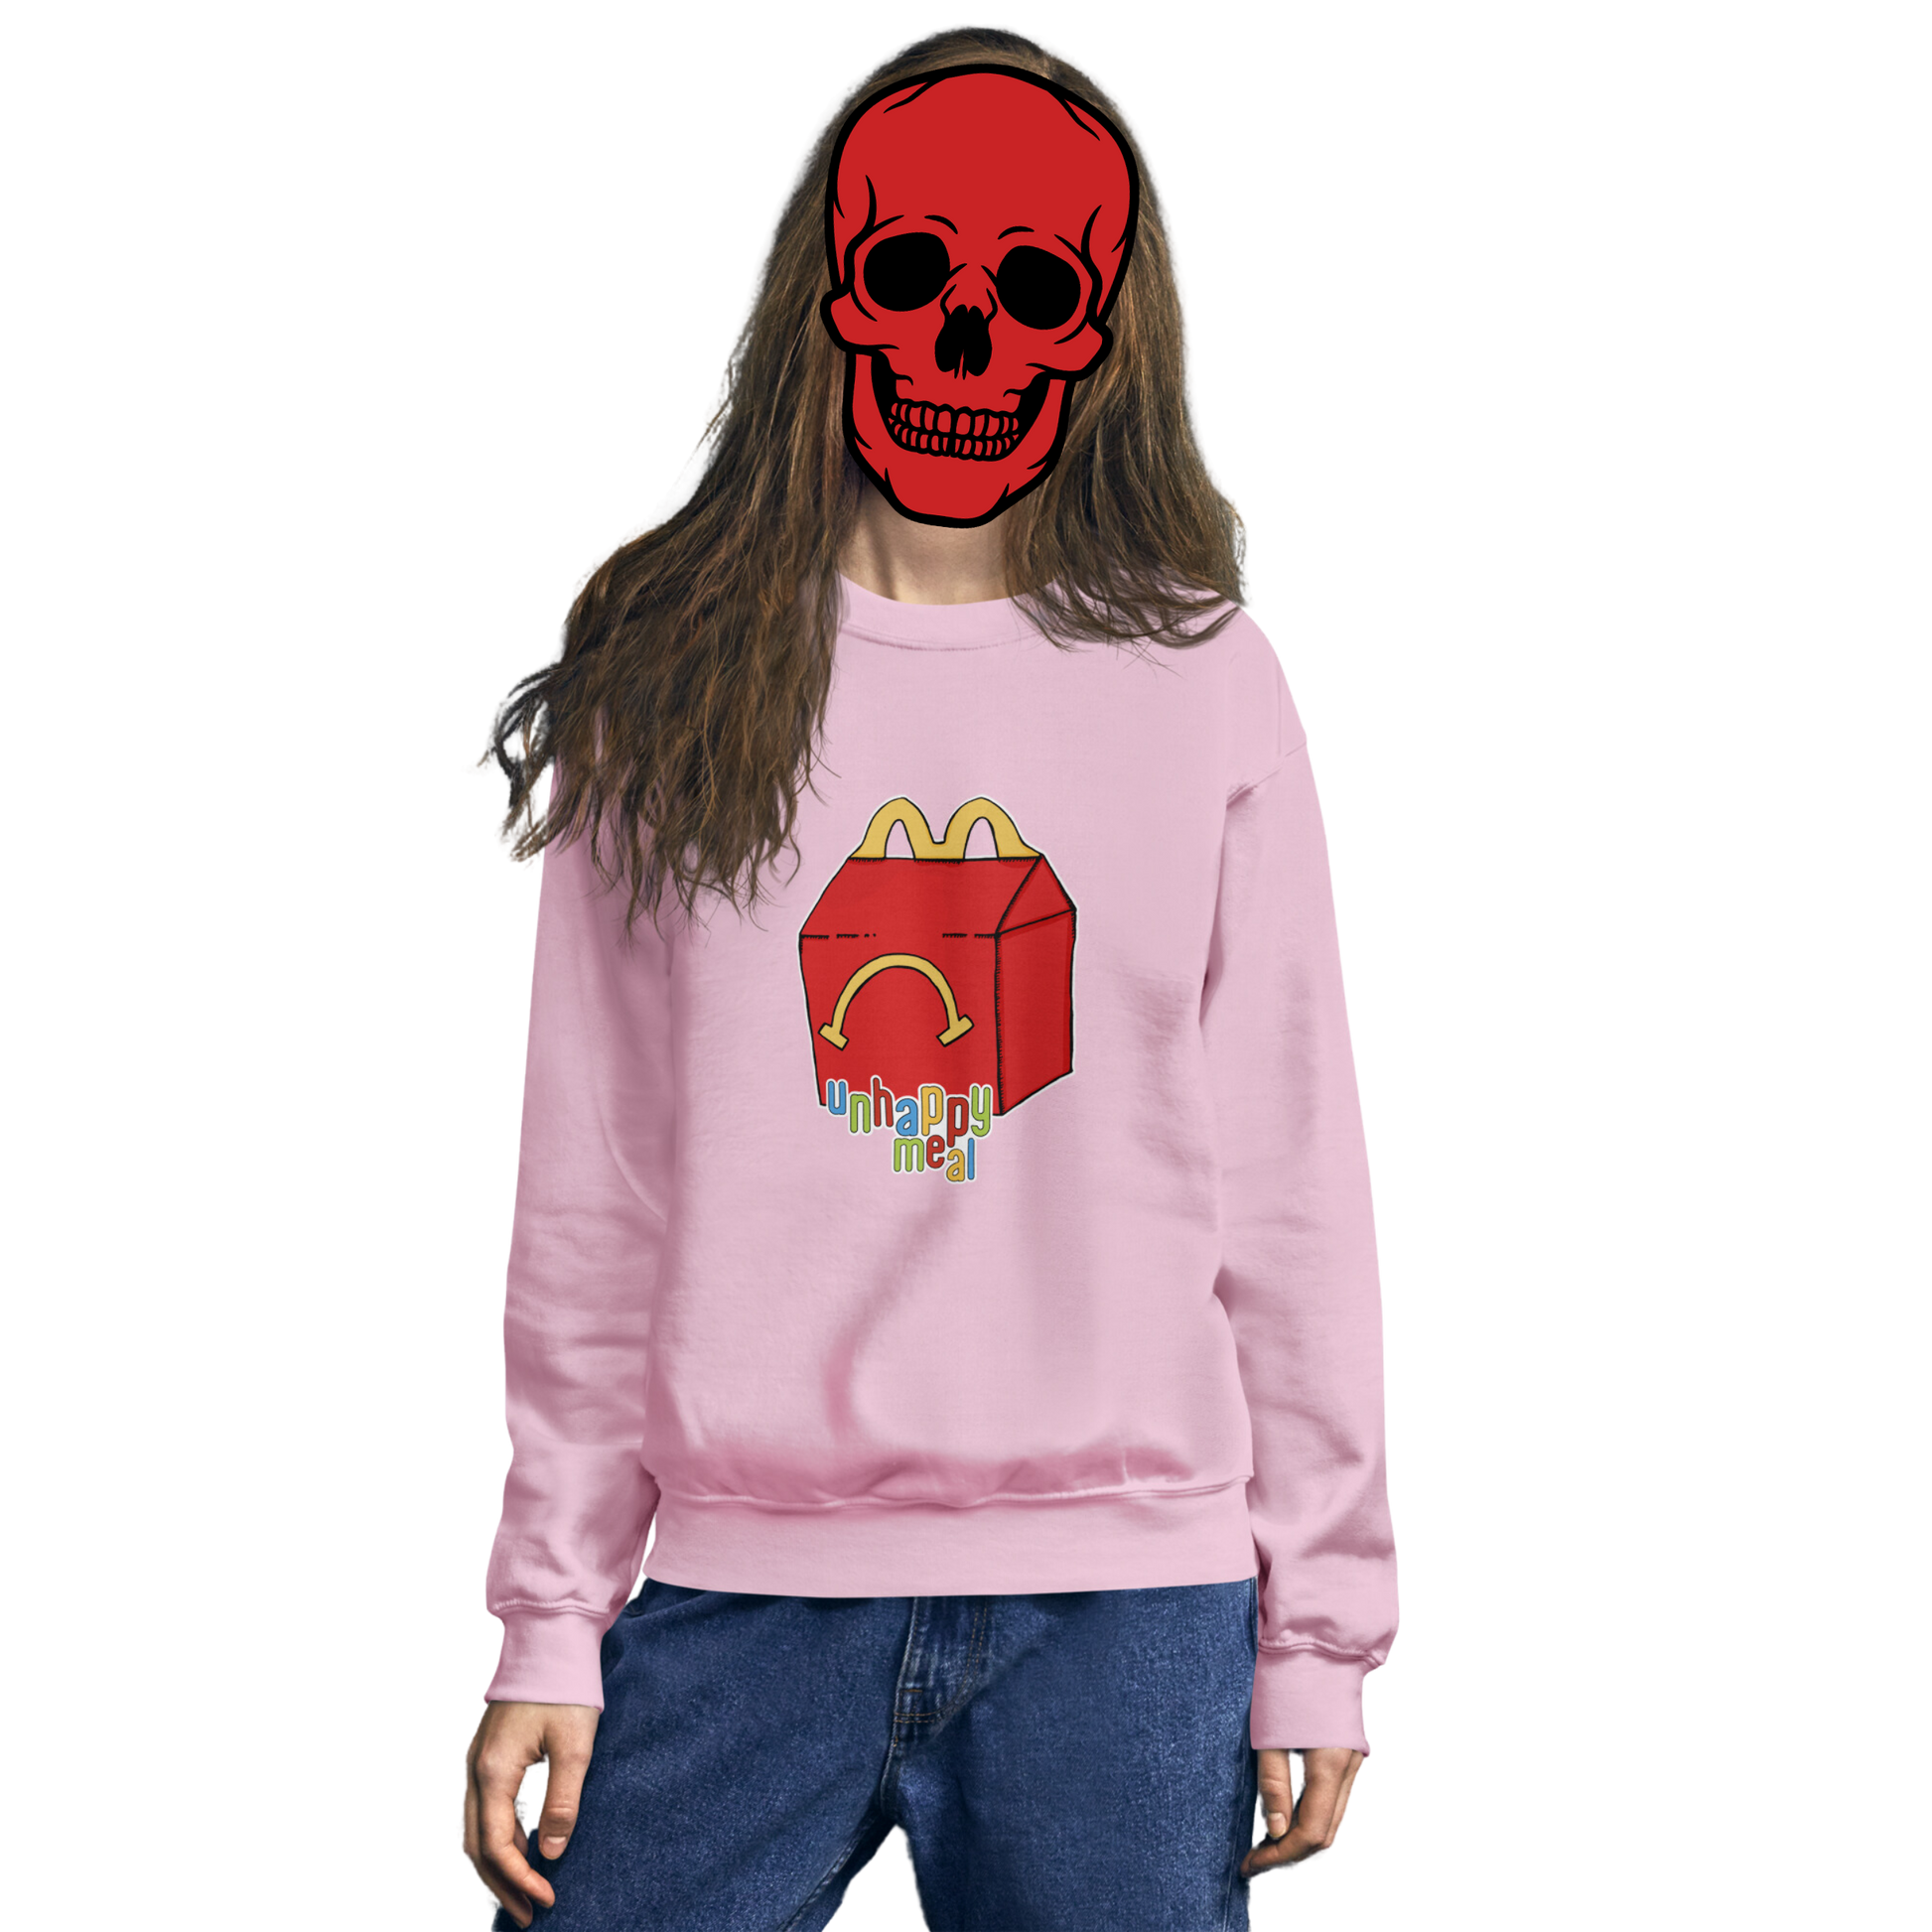 unhappy meal sweatshirt model in pink - gaslit apparel